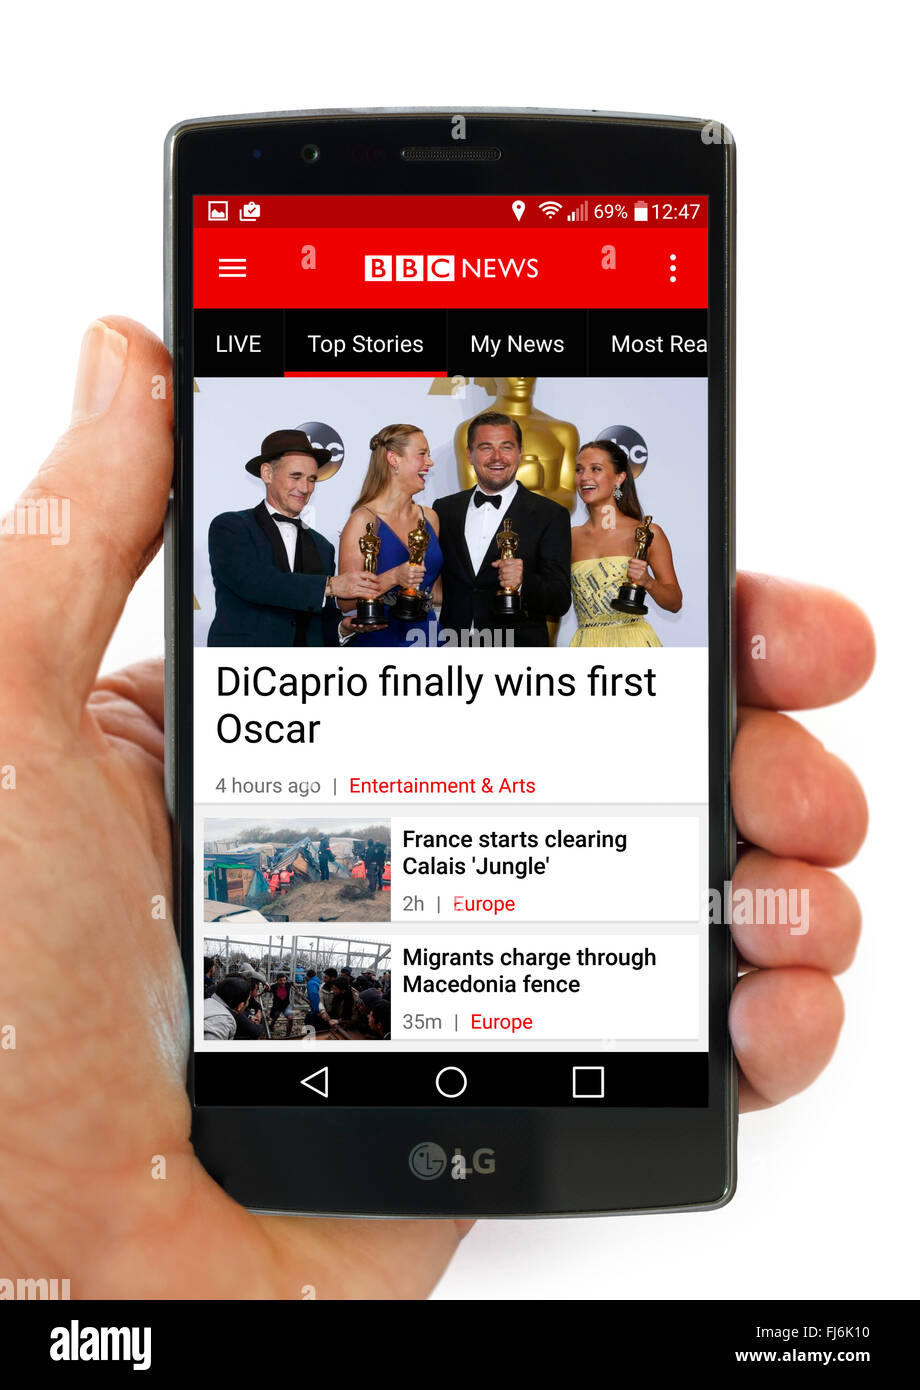 La BBC News App en un LG G4 5,5 pulgadas smartphone Android Foto de stock